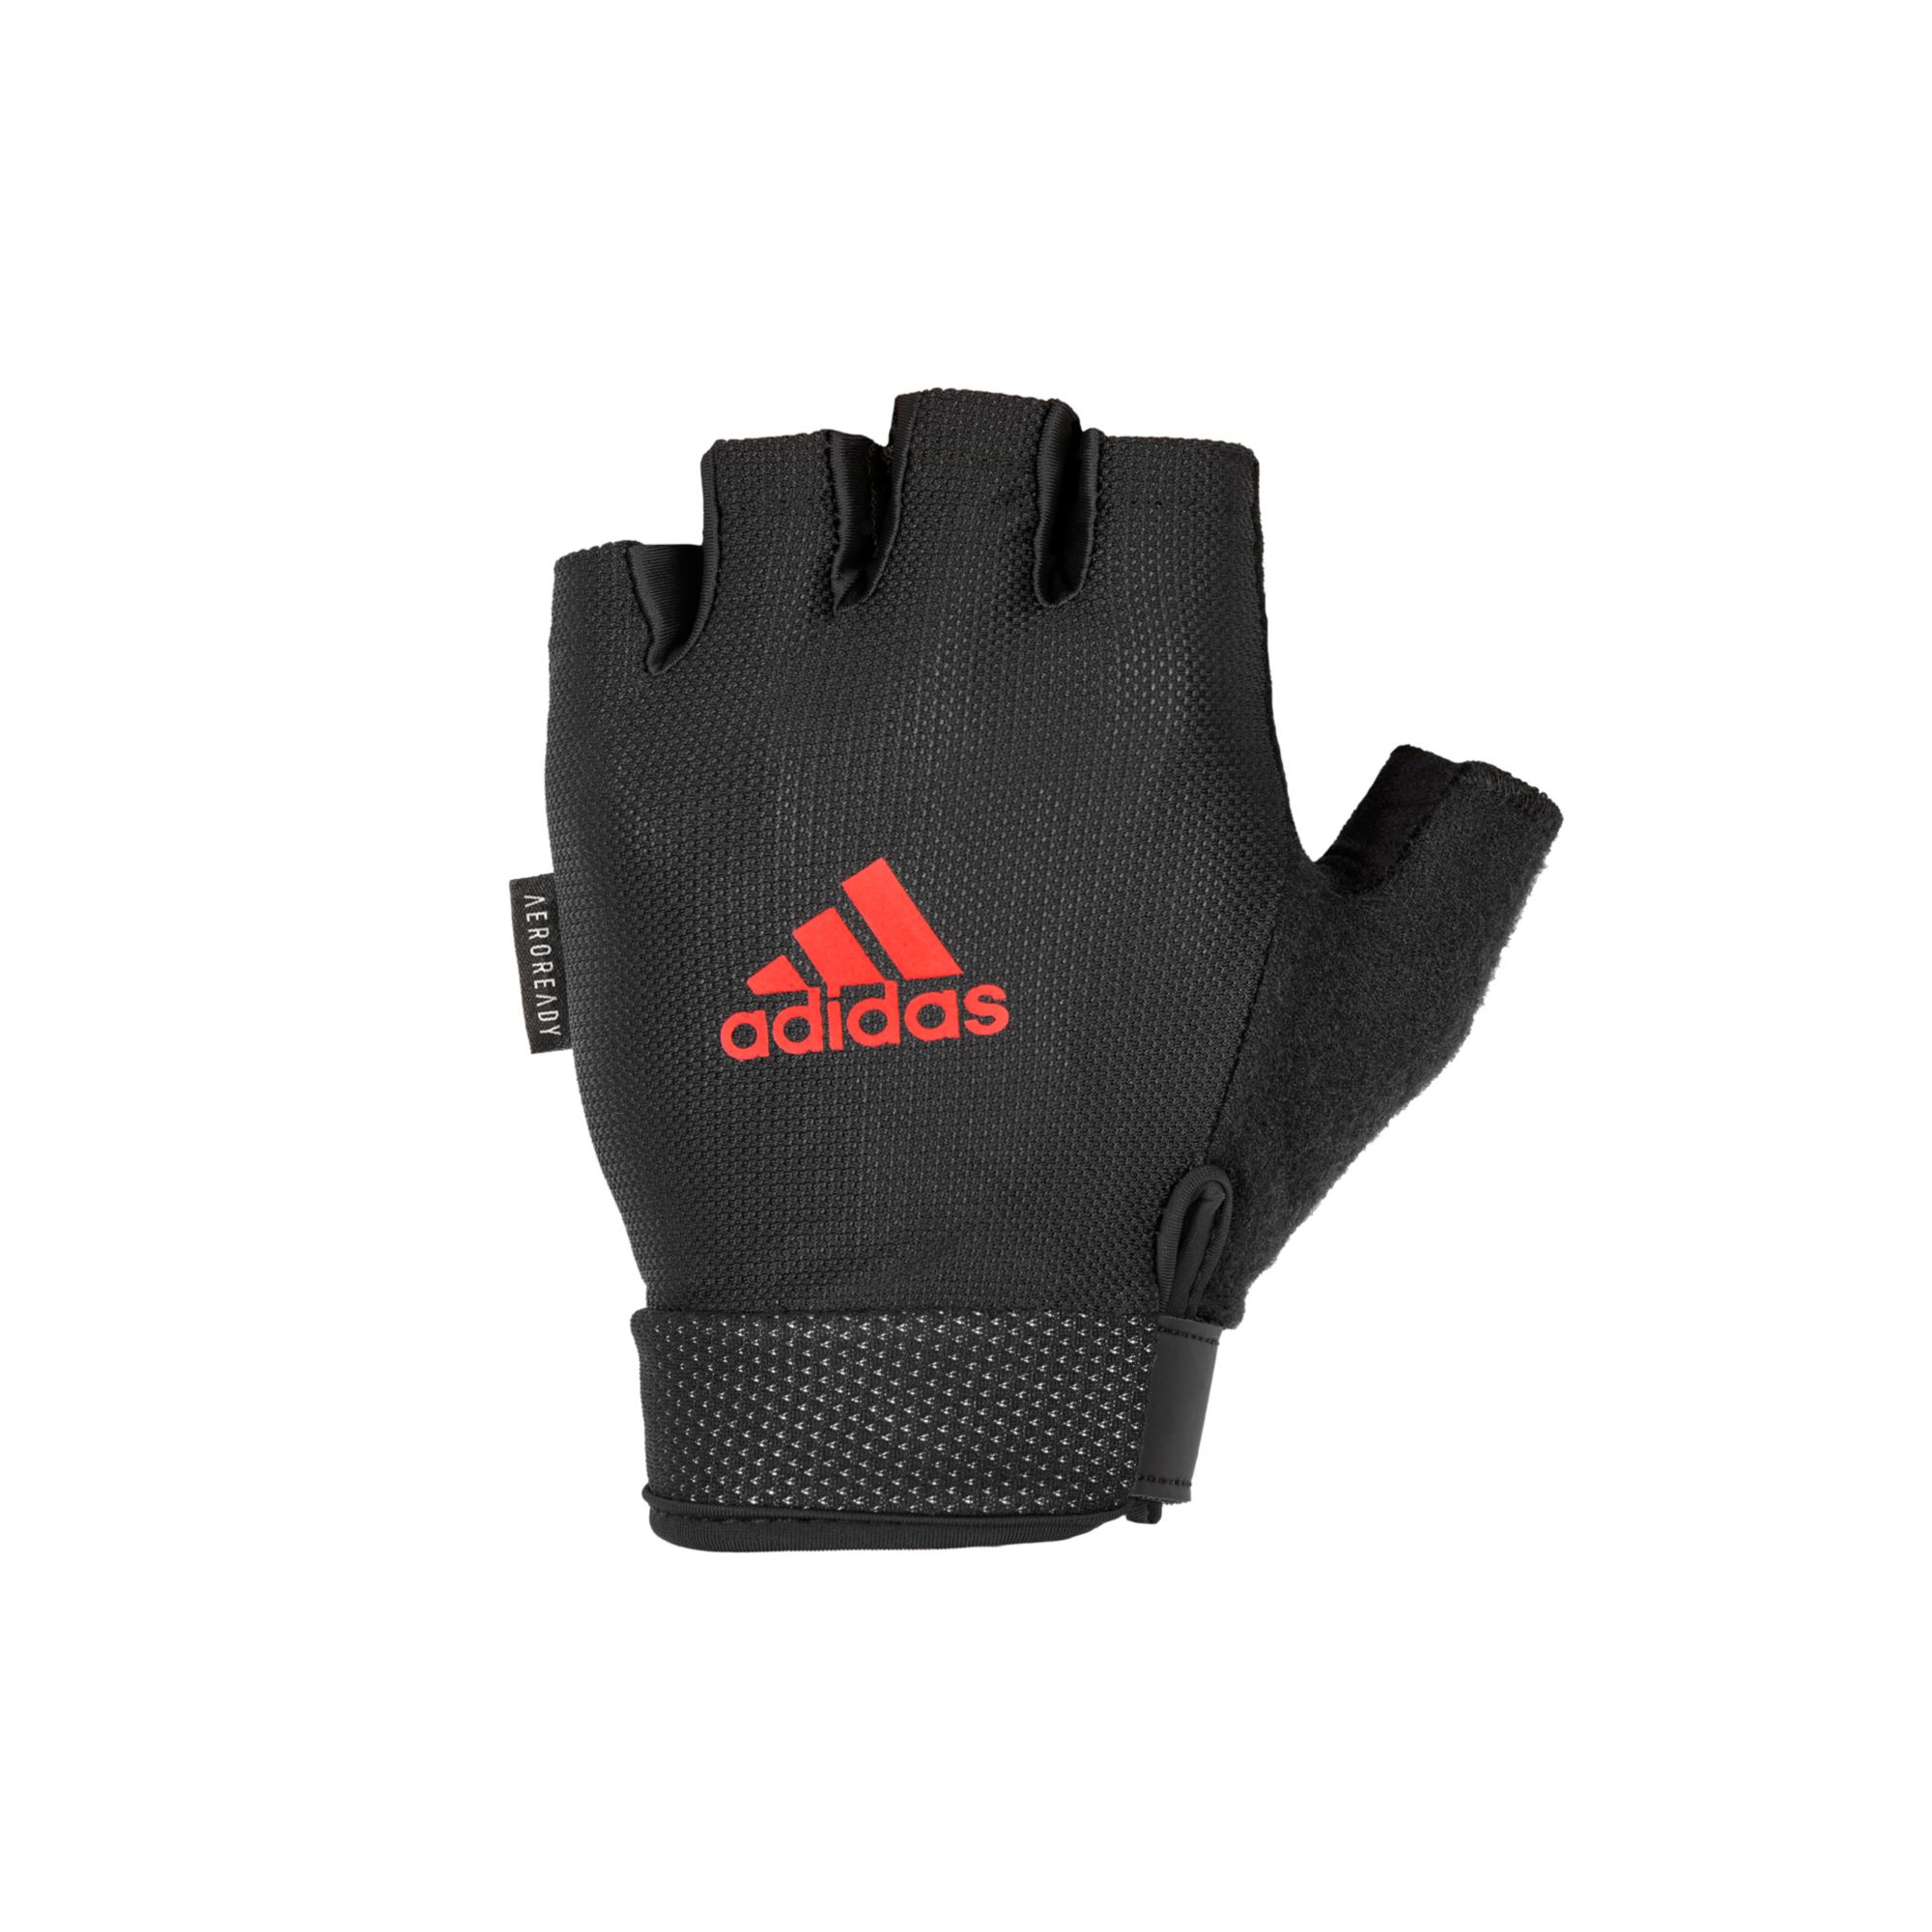 climalite gloves